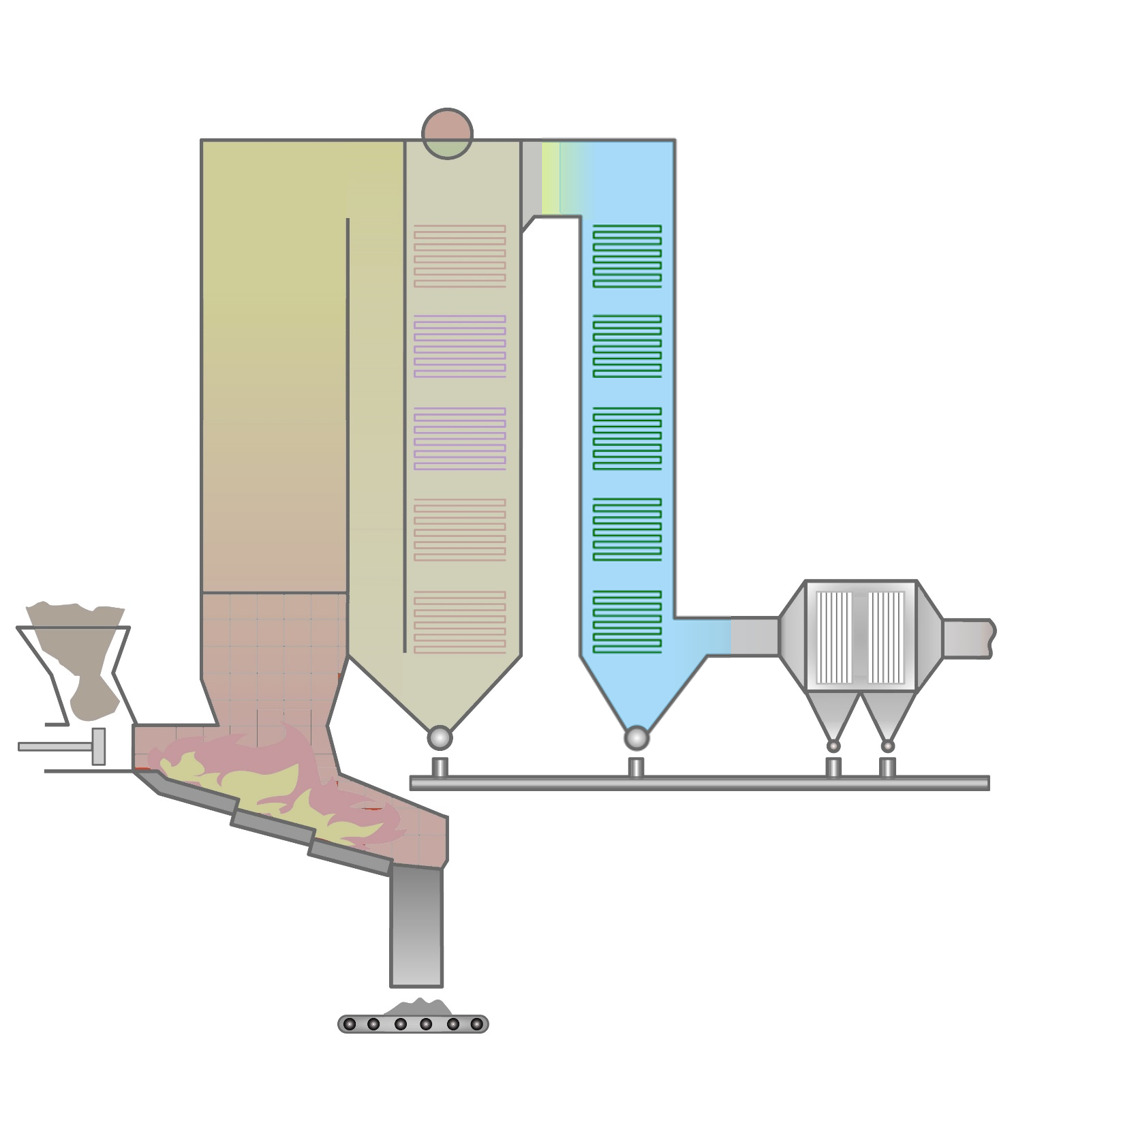 Vertical type biomass incineration boilers